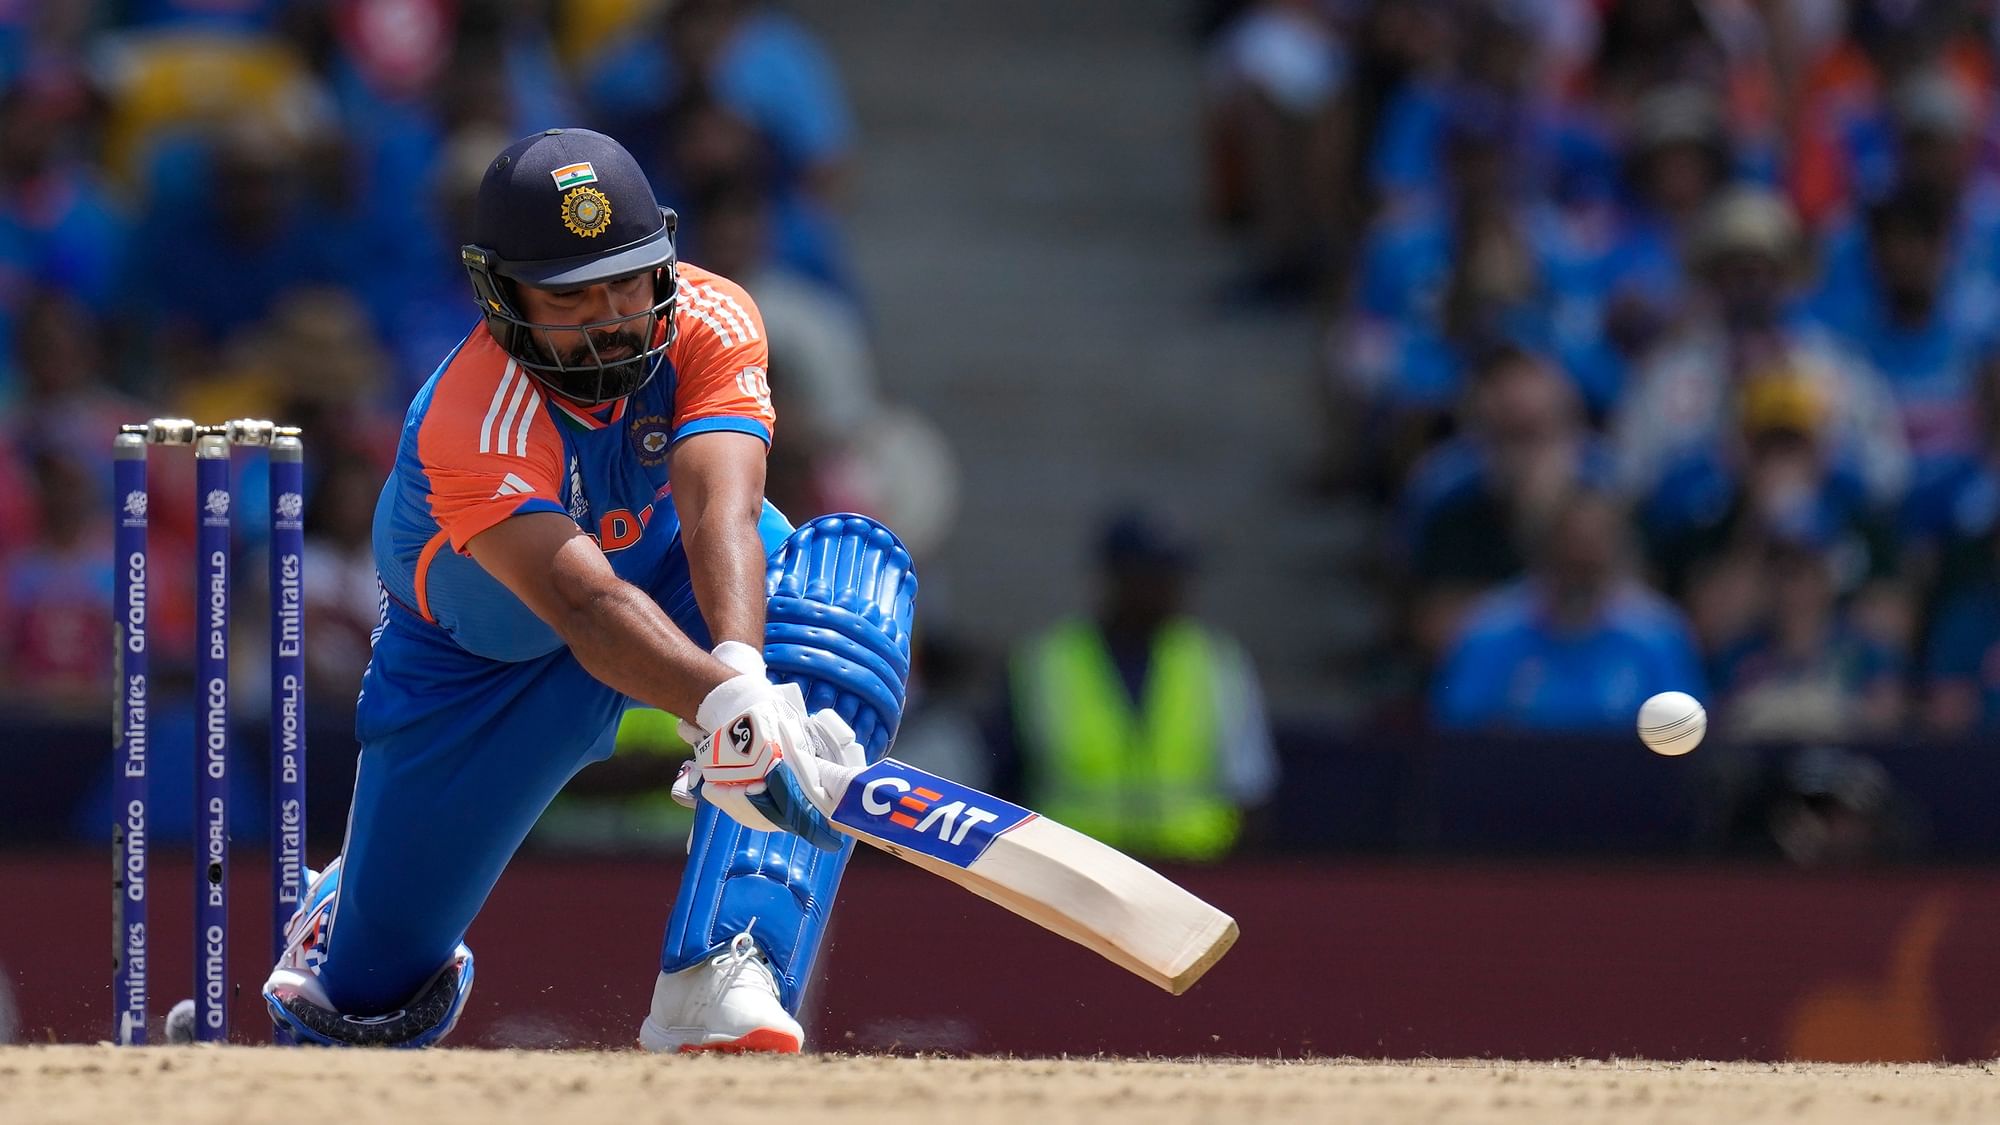 <div class="paragraphs"><p>Rohit Sharma Announces Retirement from T20 Internationals</p></div>